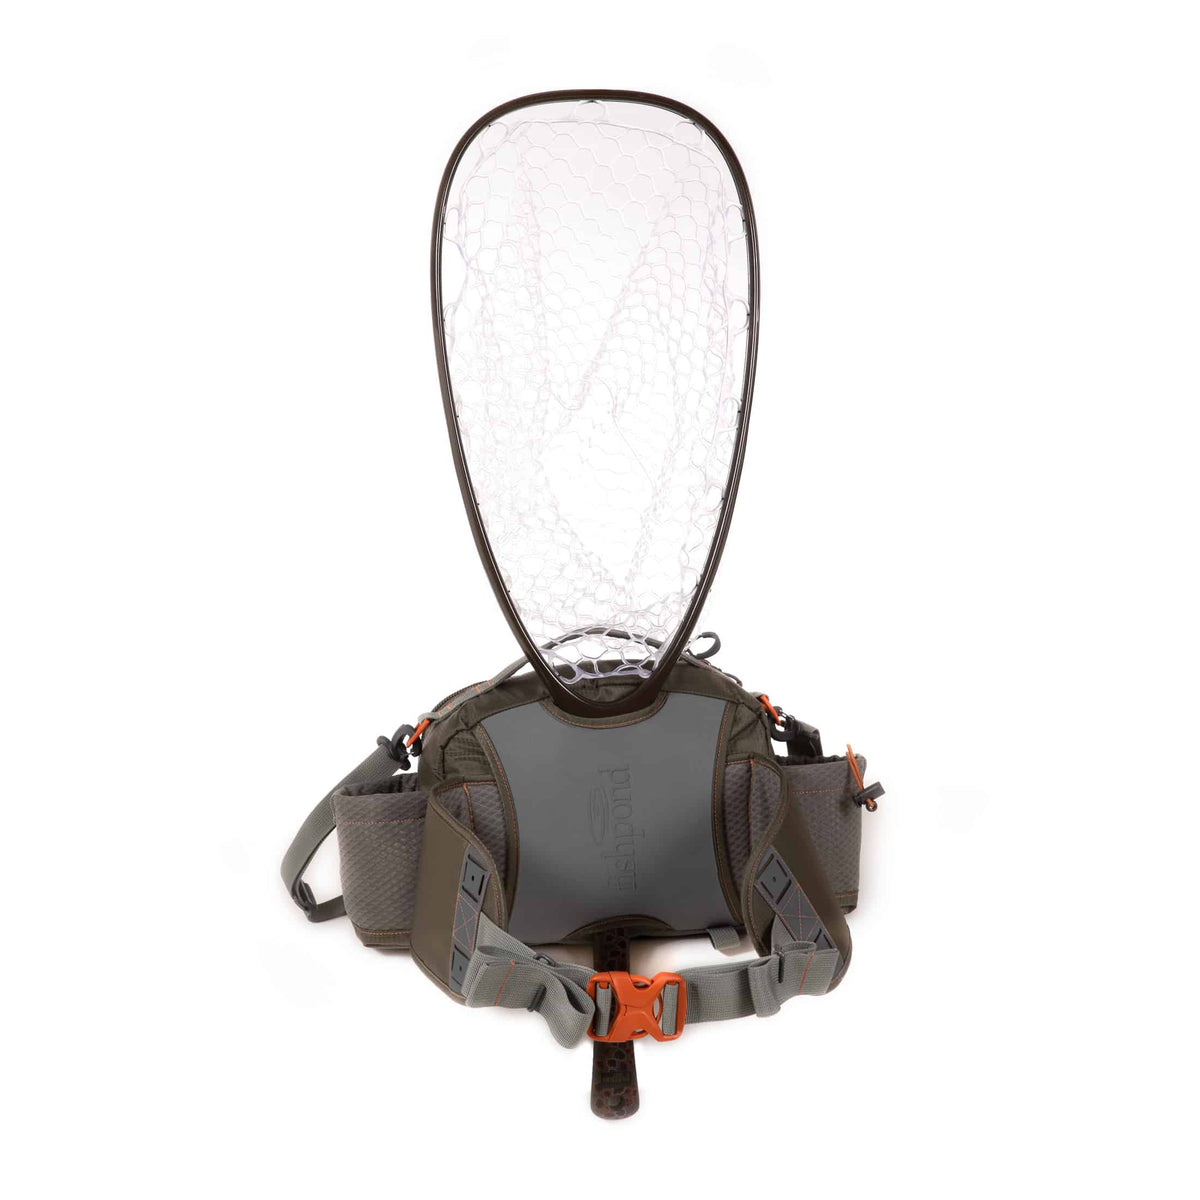 816332015694 EHLP P Fishpond Elkhorn Lumbar Pack Pebble New Fishpond Waist Pack With Fishpond Nomad Net